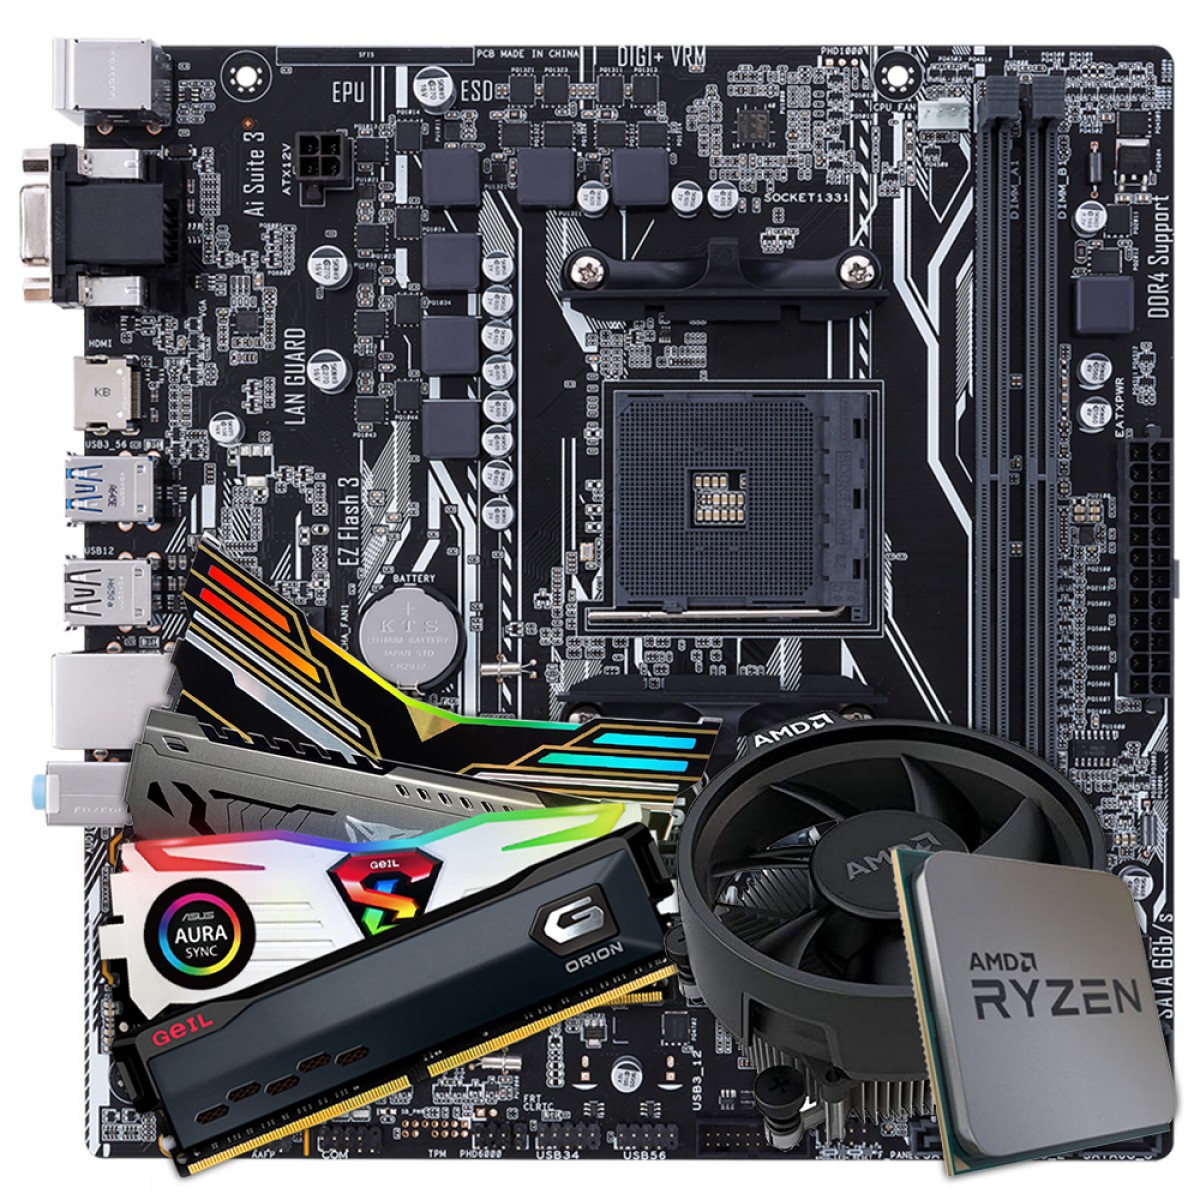 Kit Upgrade, AMD Ryzen 5 3400G, Asus Prime A320M-K, Memória DDR4 8GB 3000MHz